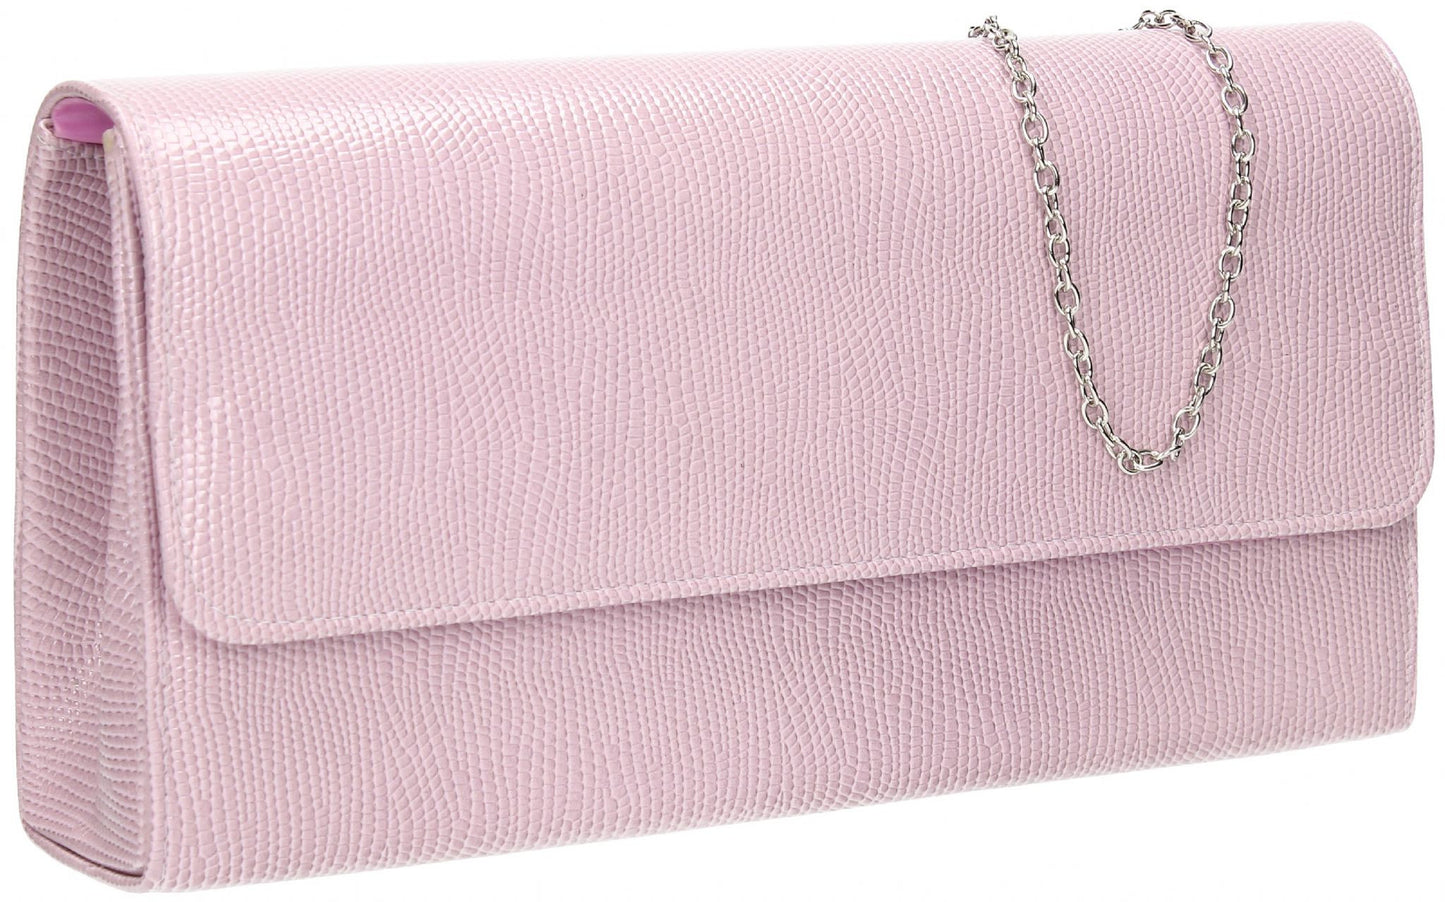 SWANKYSWANS Soho Clutch Bag Lilac Cute Cheap Clutch Bag For Weddings School and Work